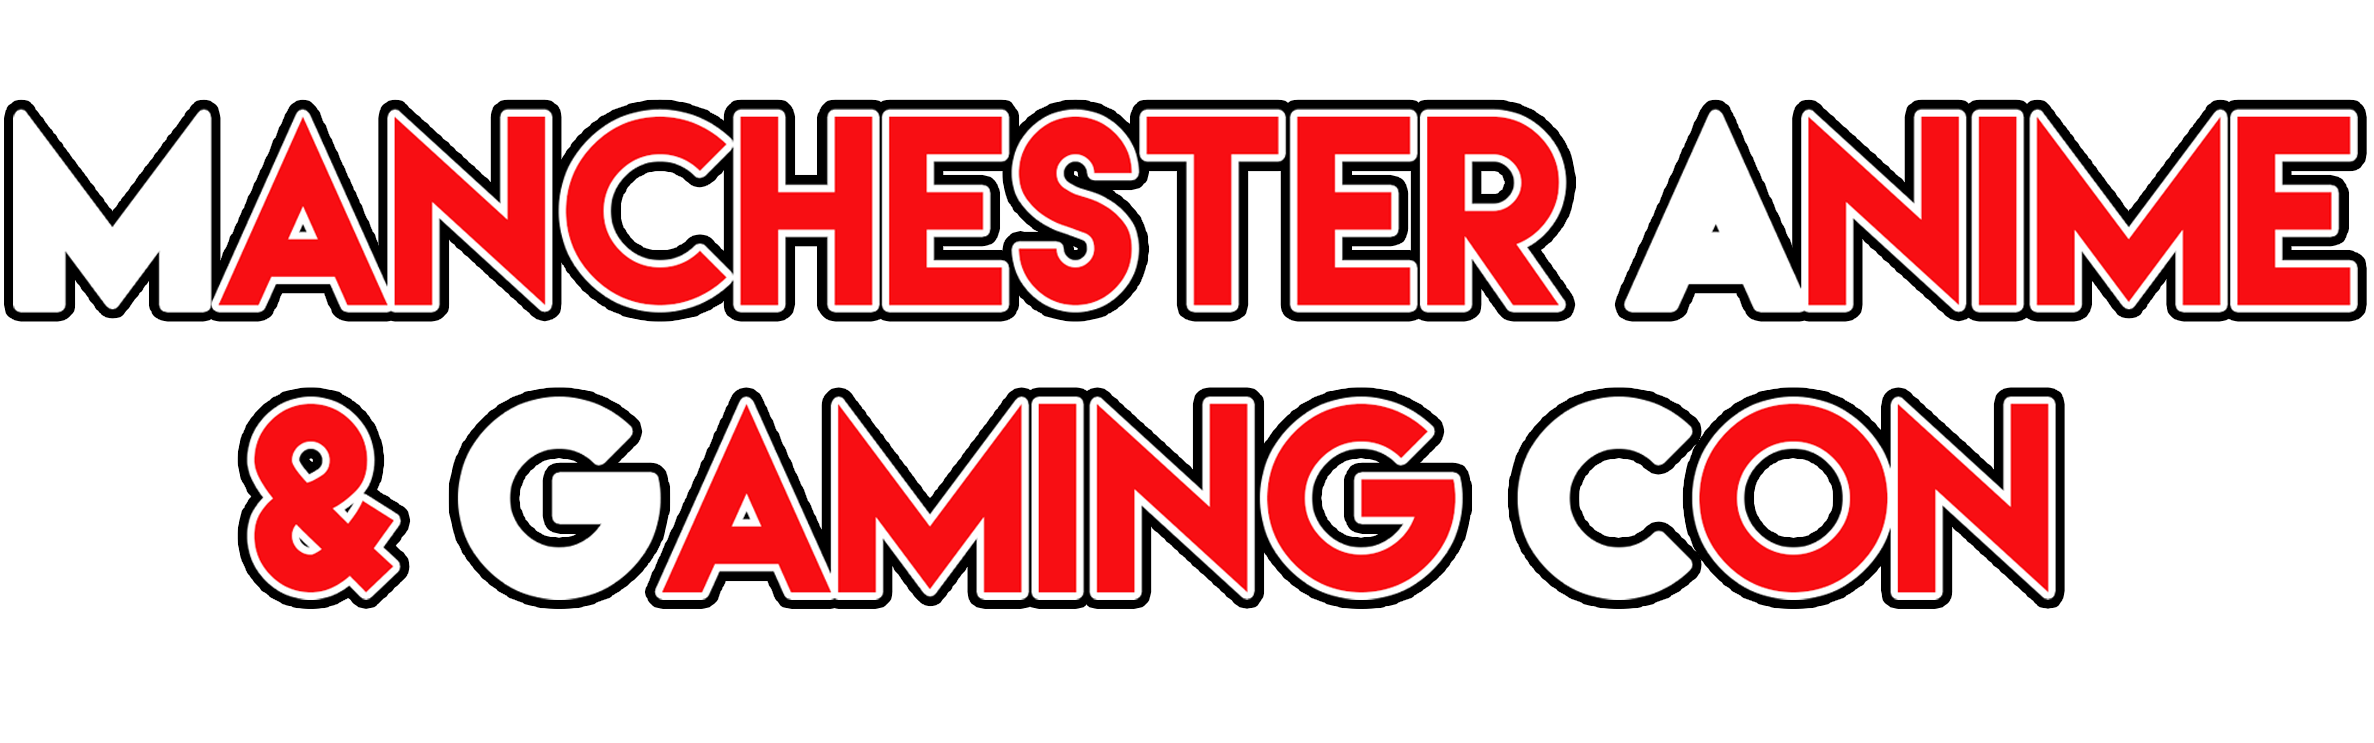 Manchester Anime & Gaming Con